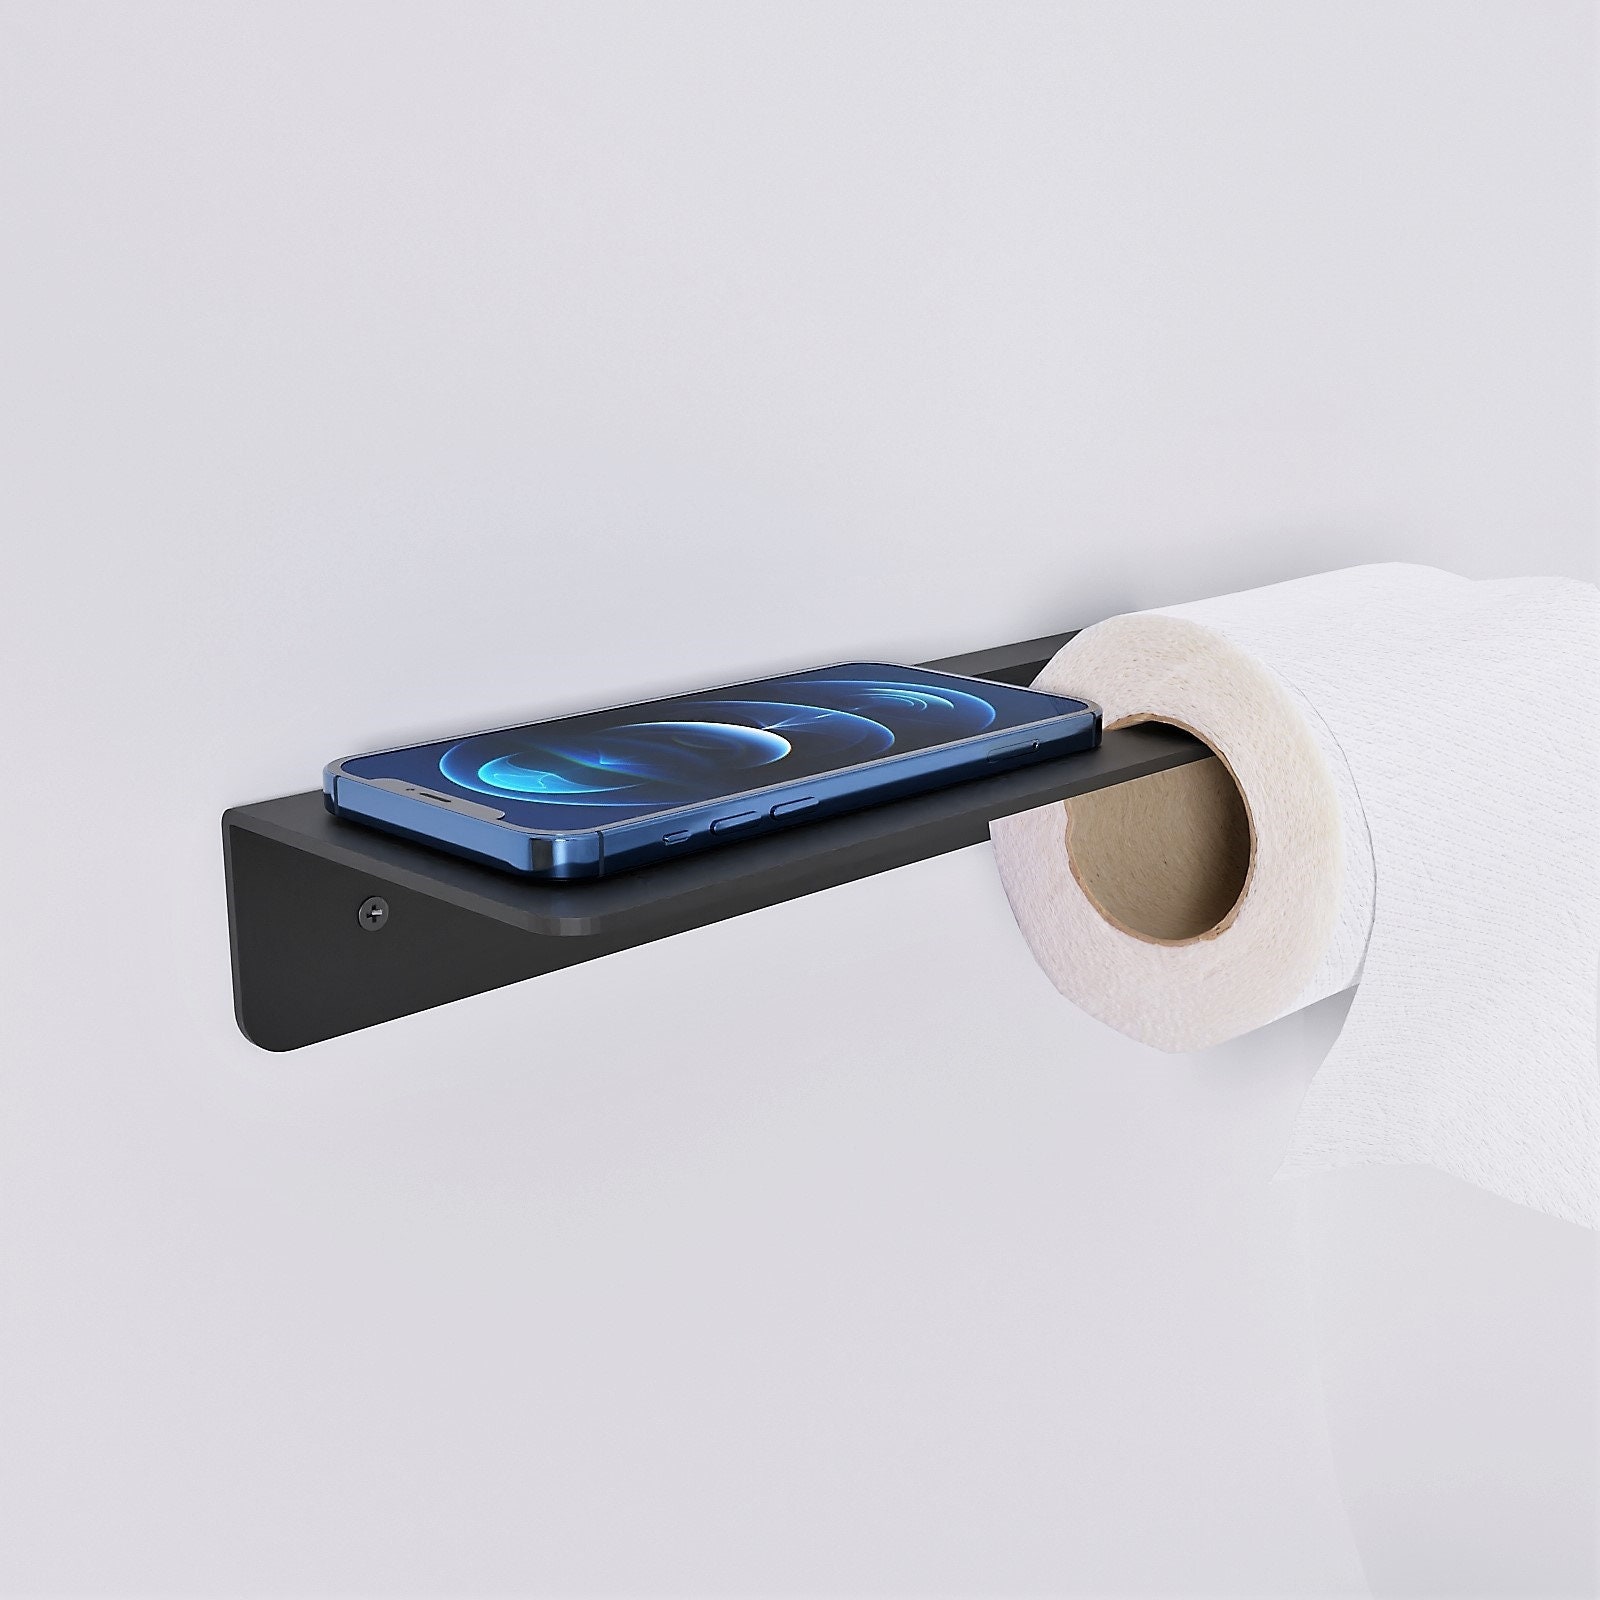 Modern Toilet Paper Holder With Shelf, Paper Towel Holder, Bathroom  Accessories, Bathroom Shelf, Bathroom Decor 